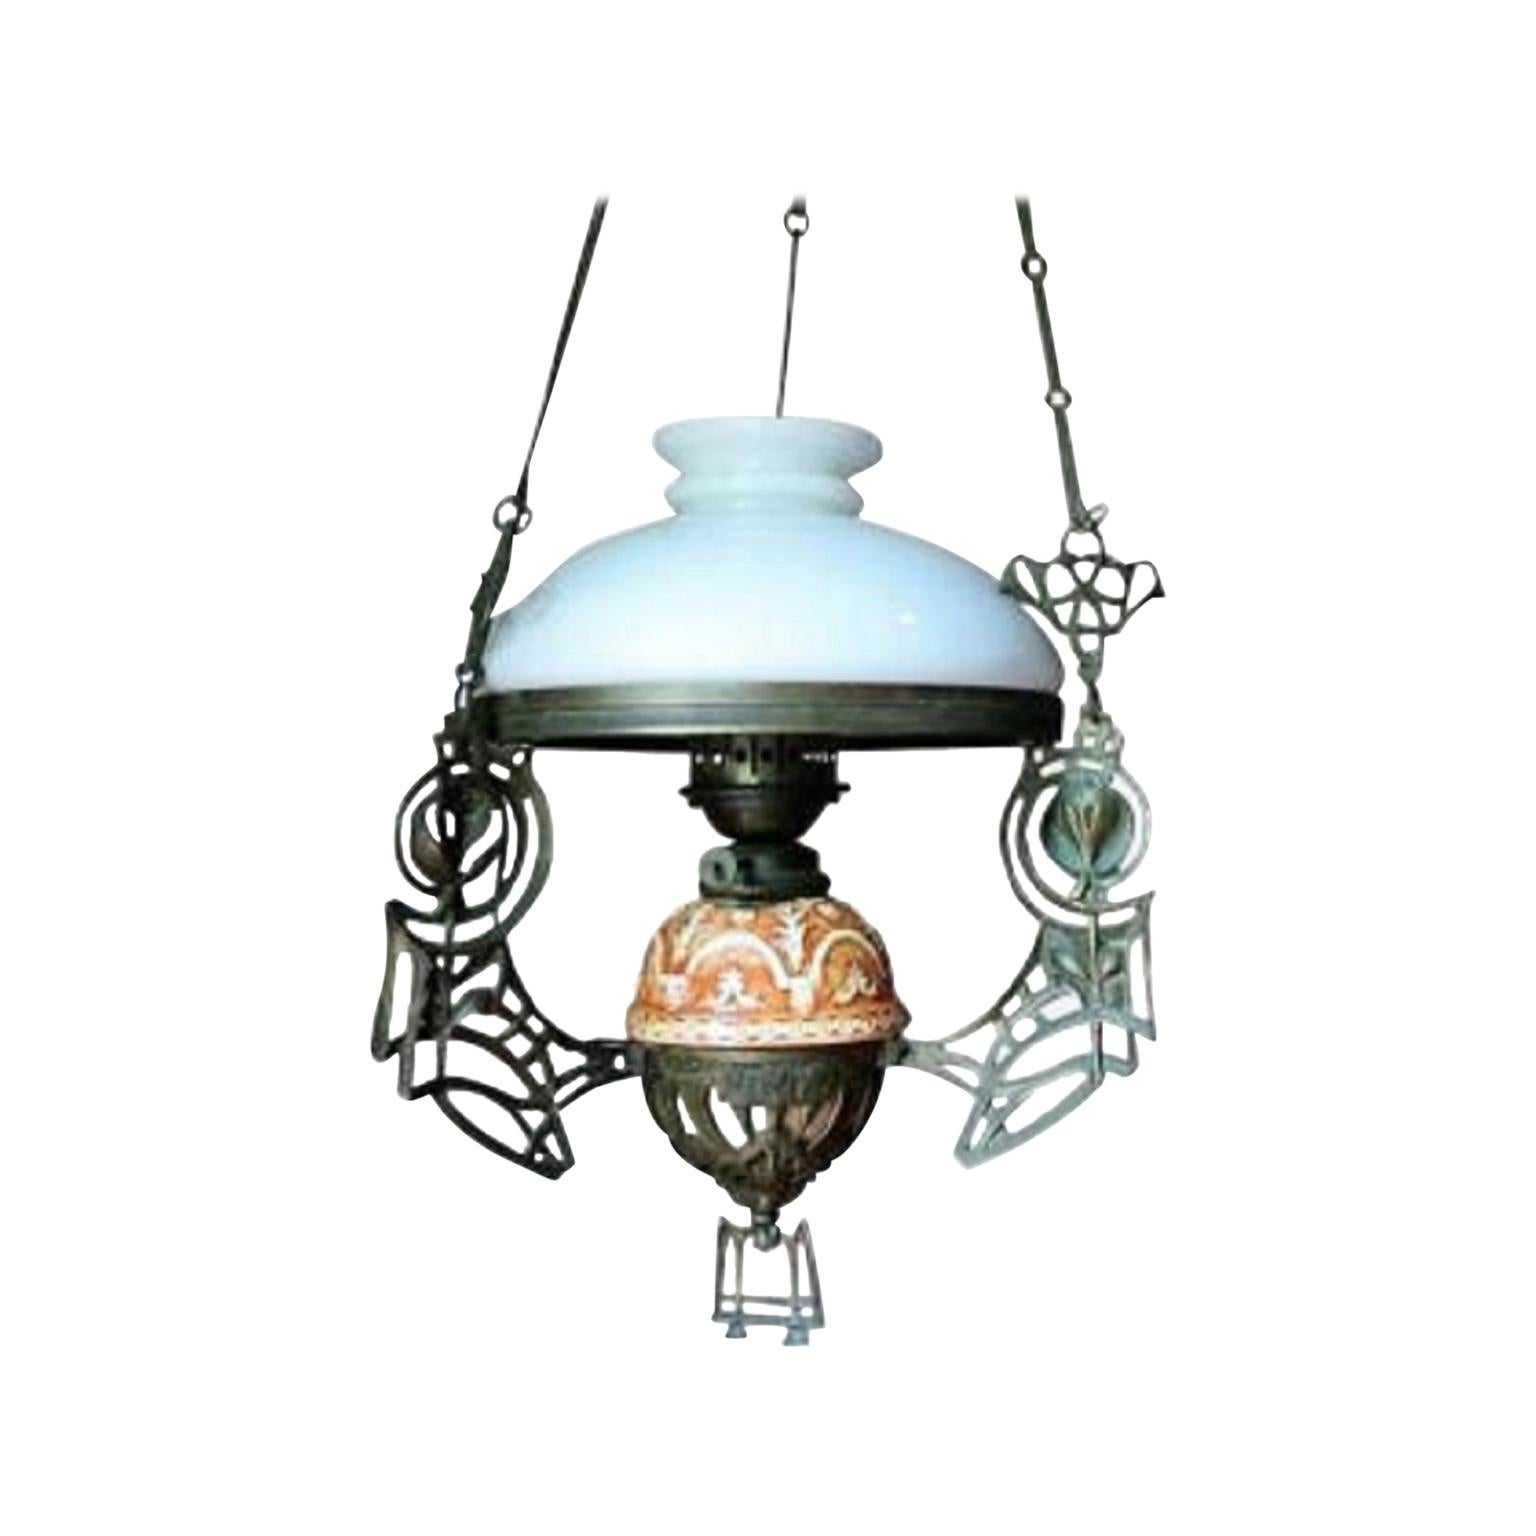 Italian 19th Century Art Nouveau Gas Lantern For Sale